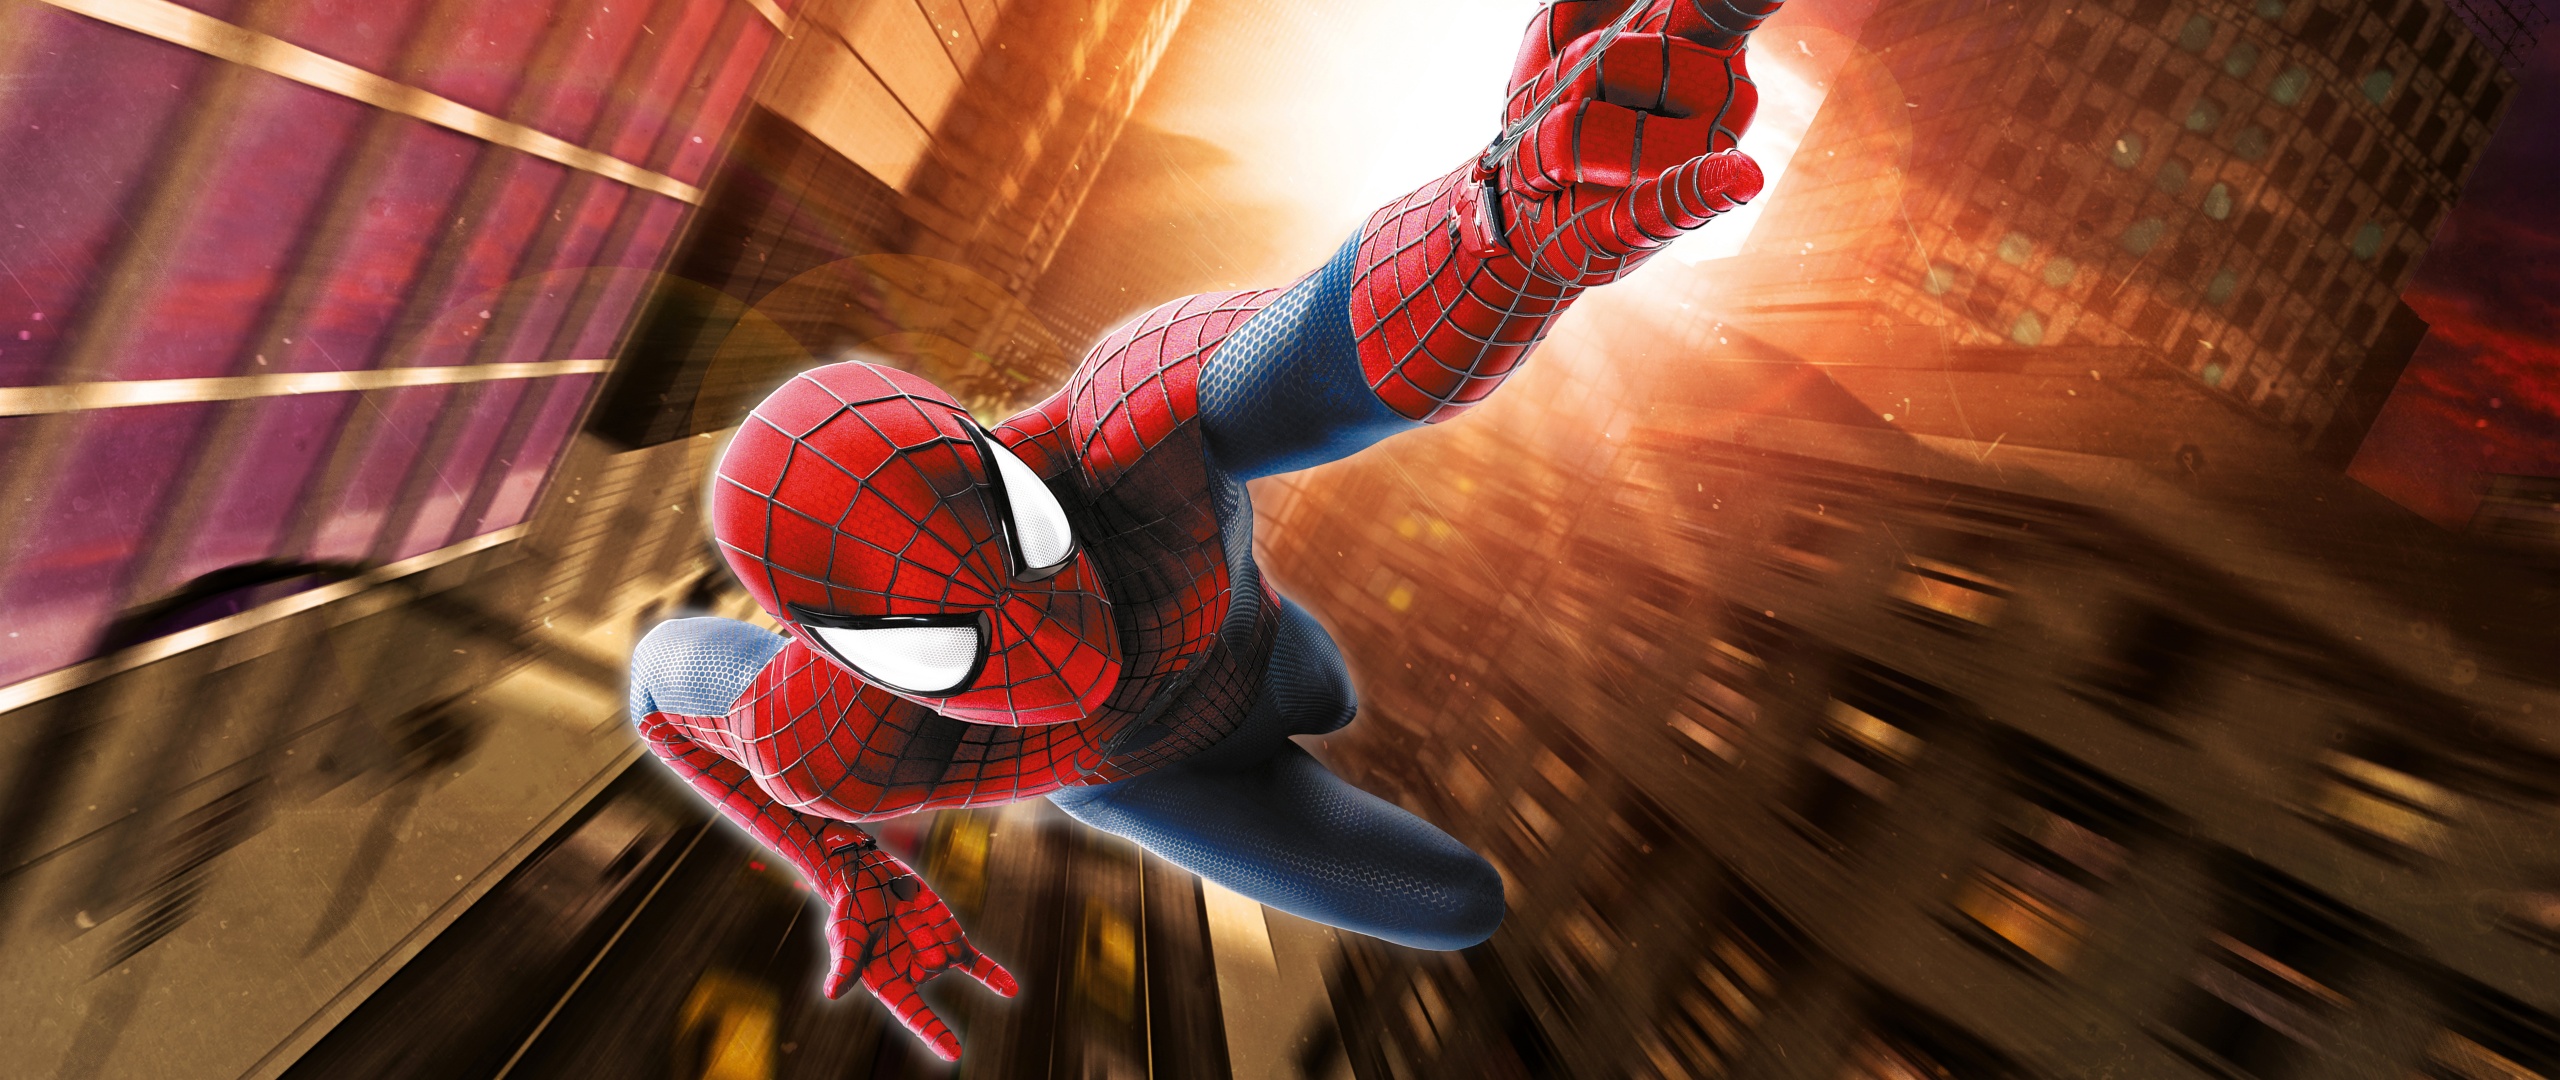 Spider-Man Wallpaper 4K, Marvel Superheroes, 5K, Graphics CGI, #8376